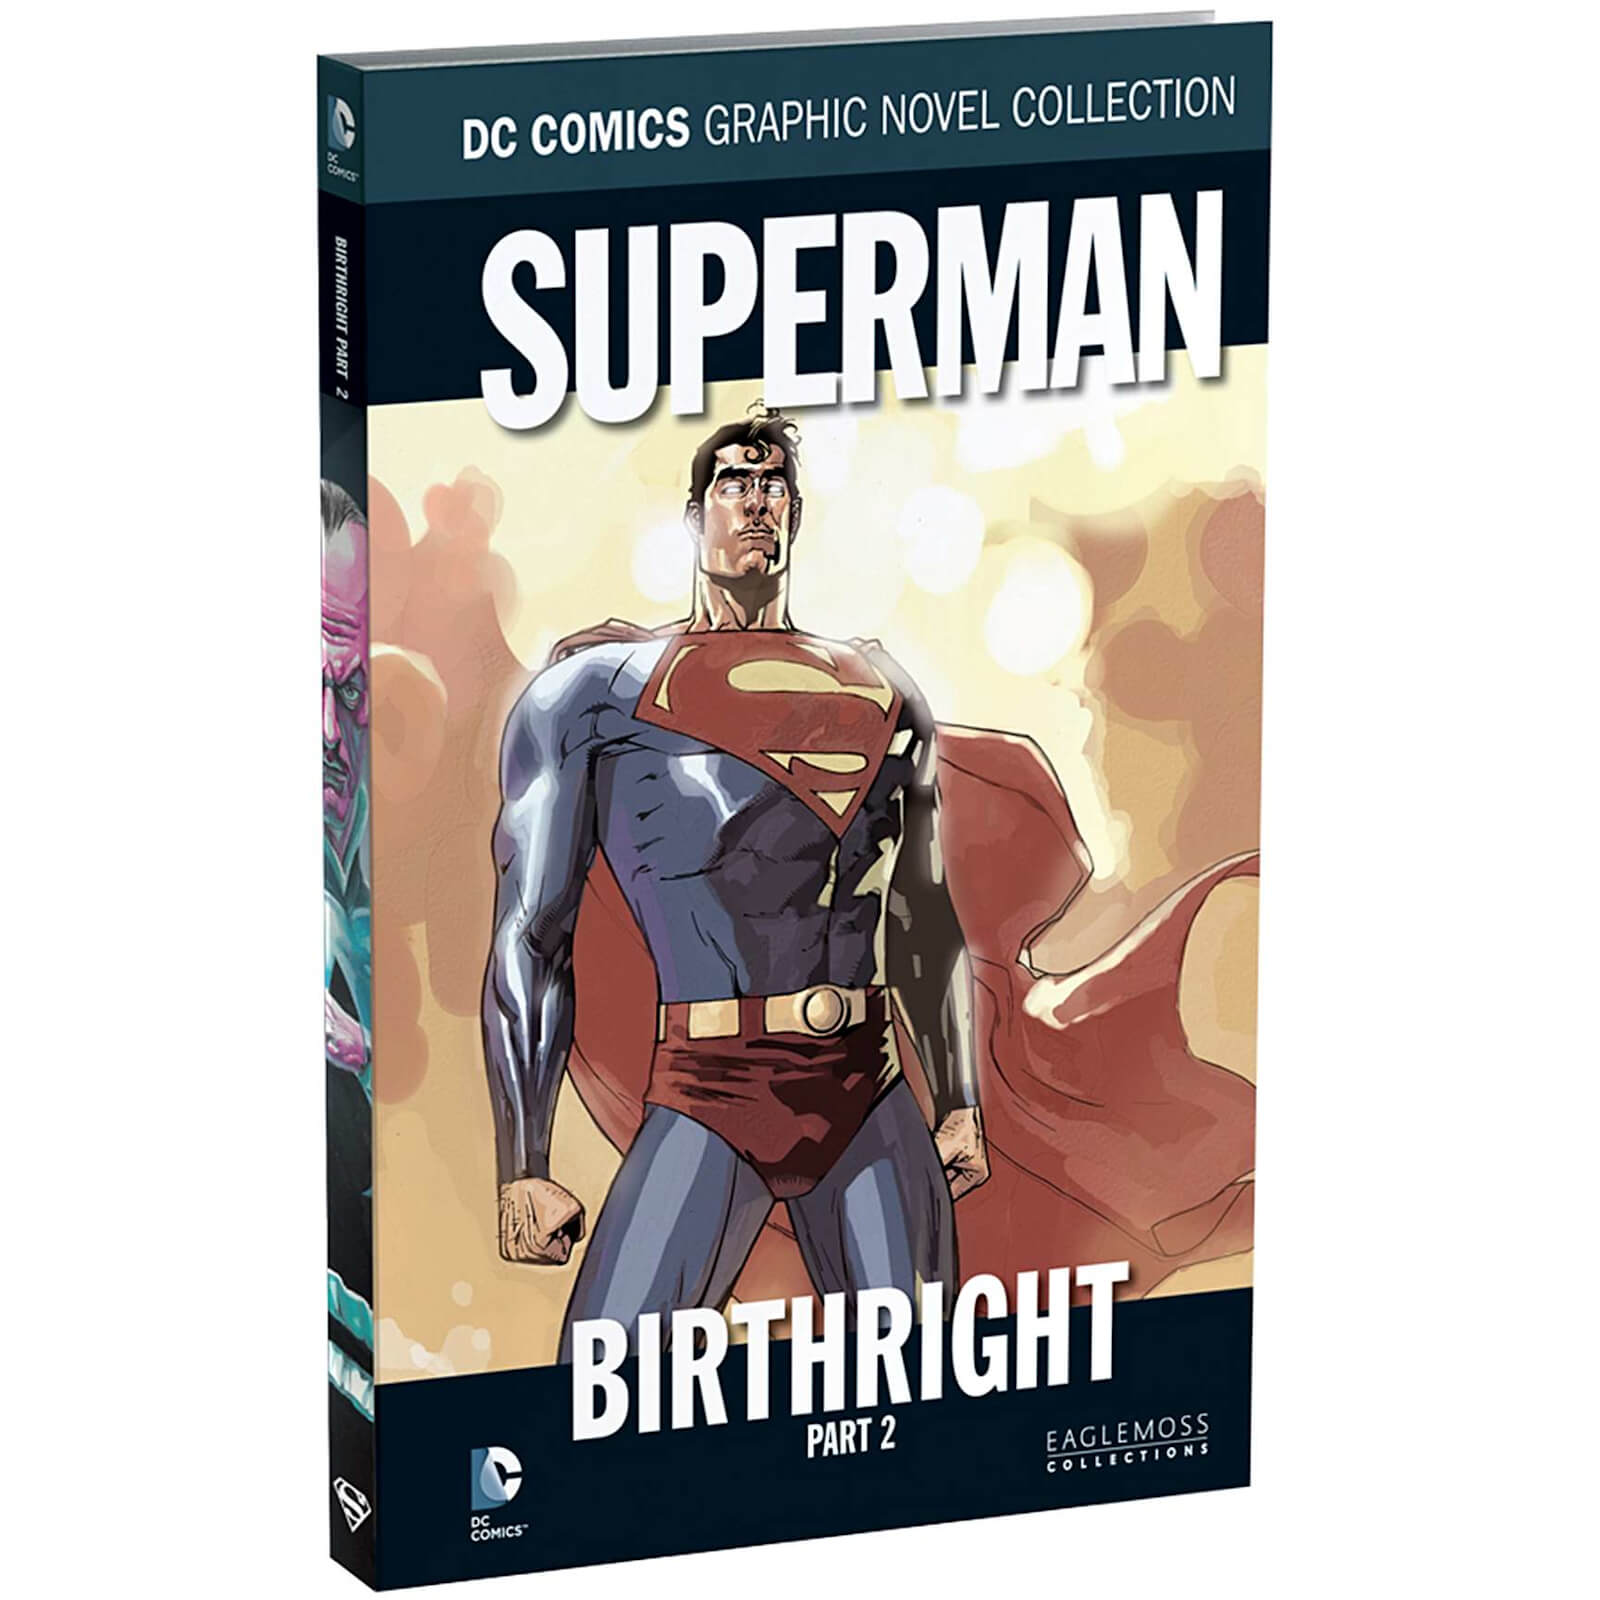 DC Comics Graphic Novel Collection - Superman: Birthright Part 2 - Volume 41